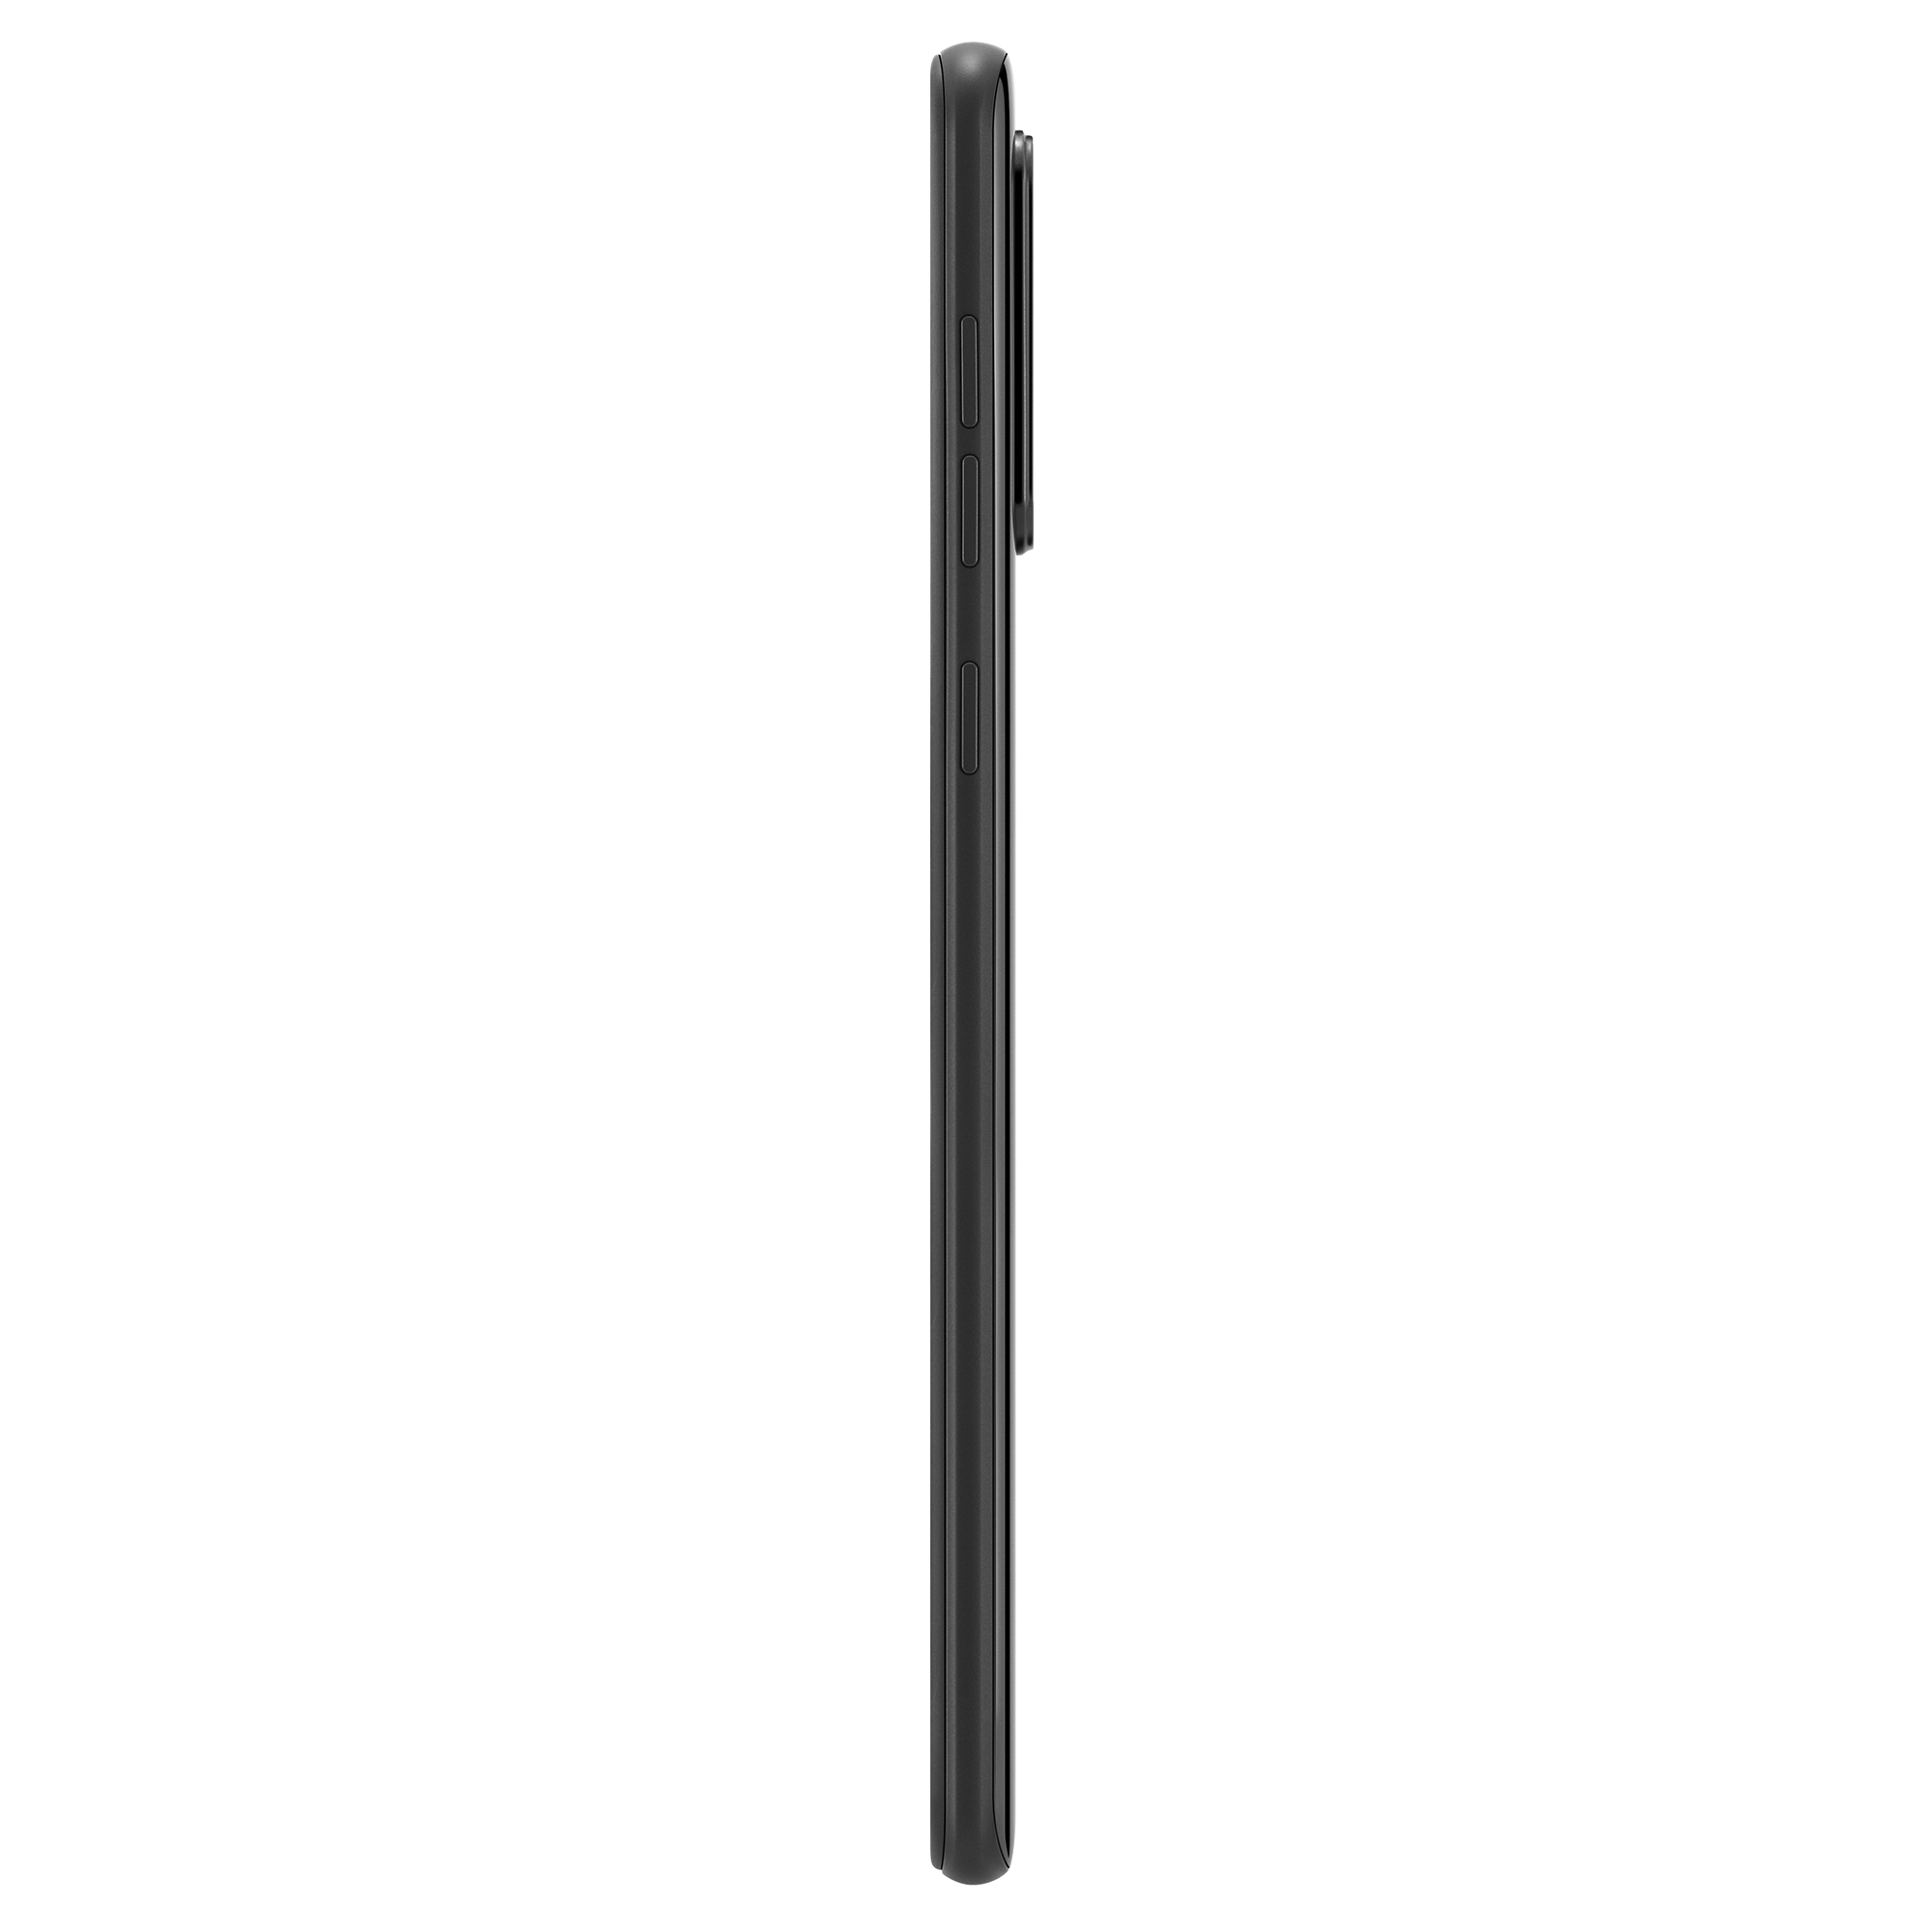 Straight Talk SAMSUNG Galaxy A21, 32GB Black- Prepaid Smartphone - image 11 of 11